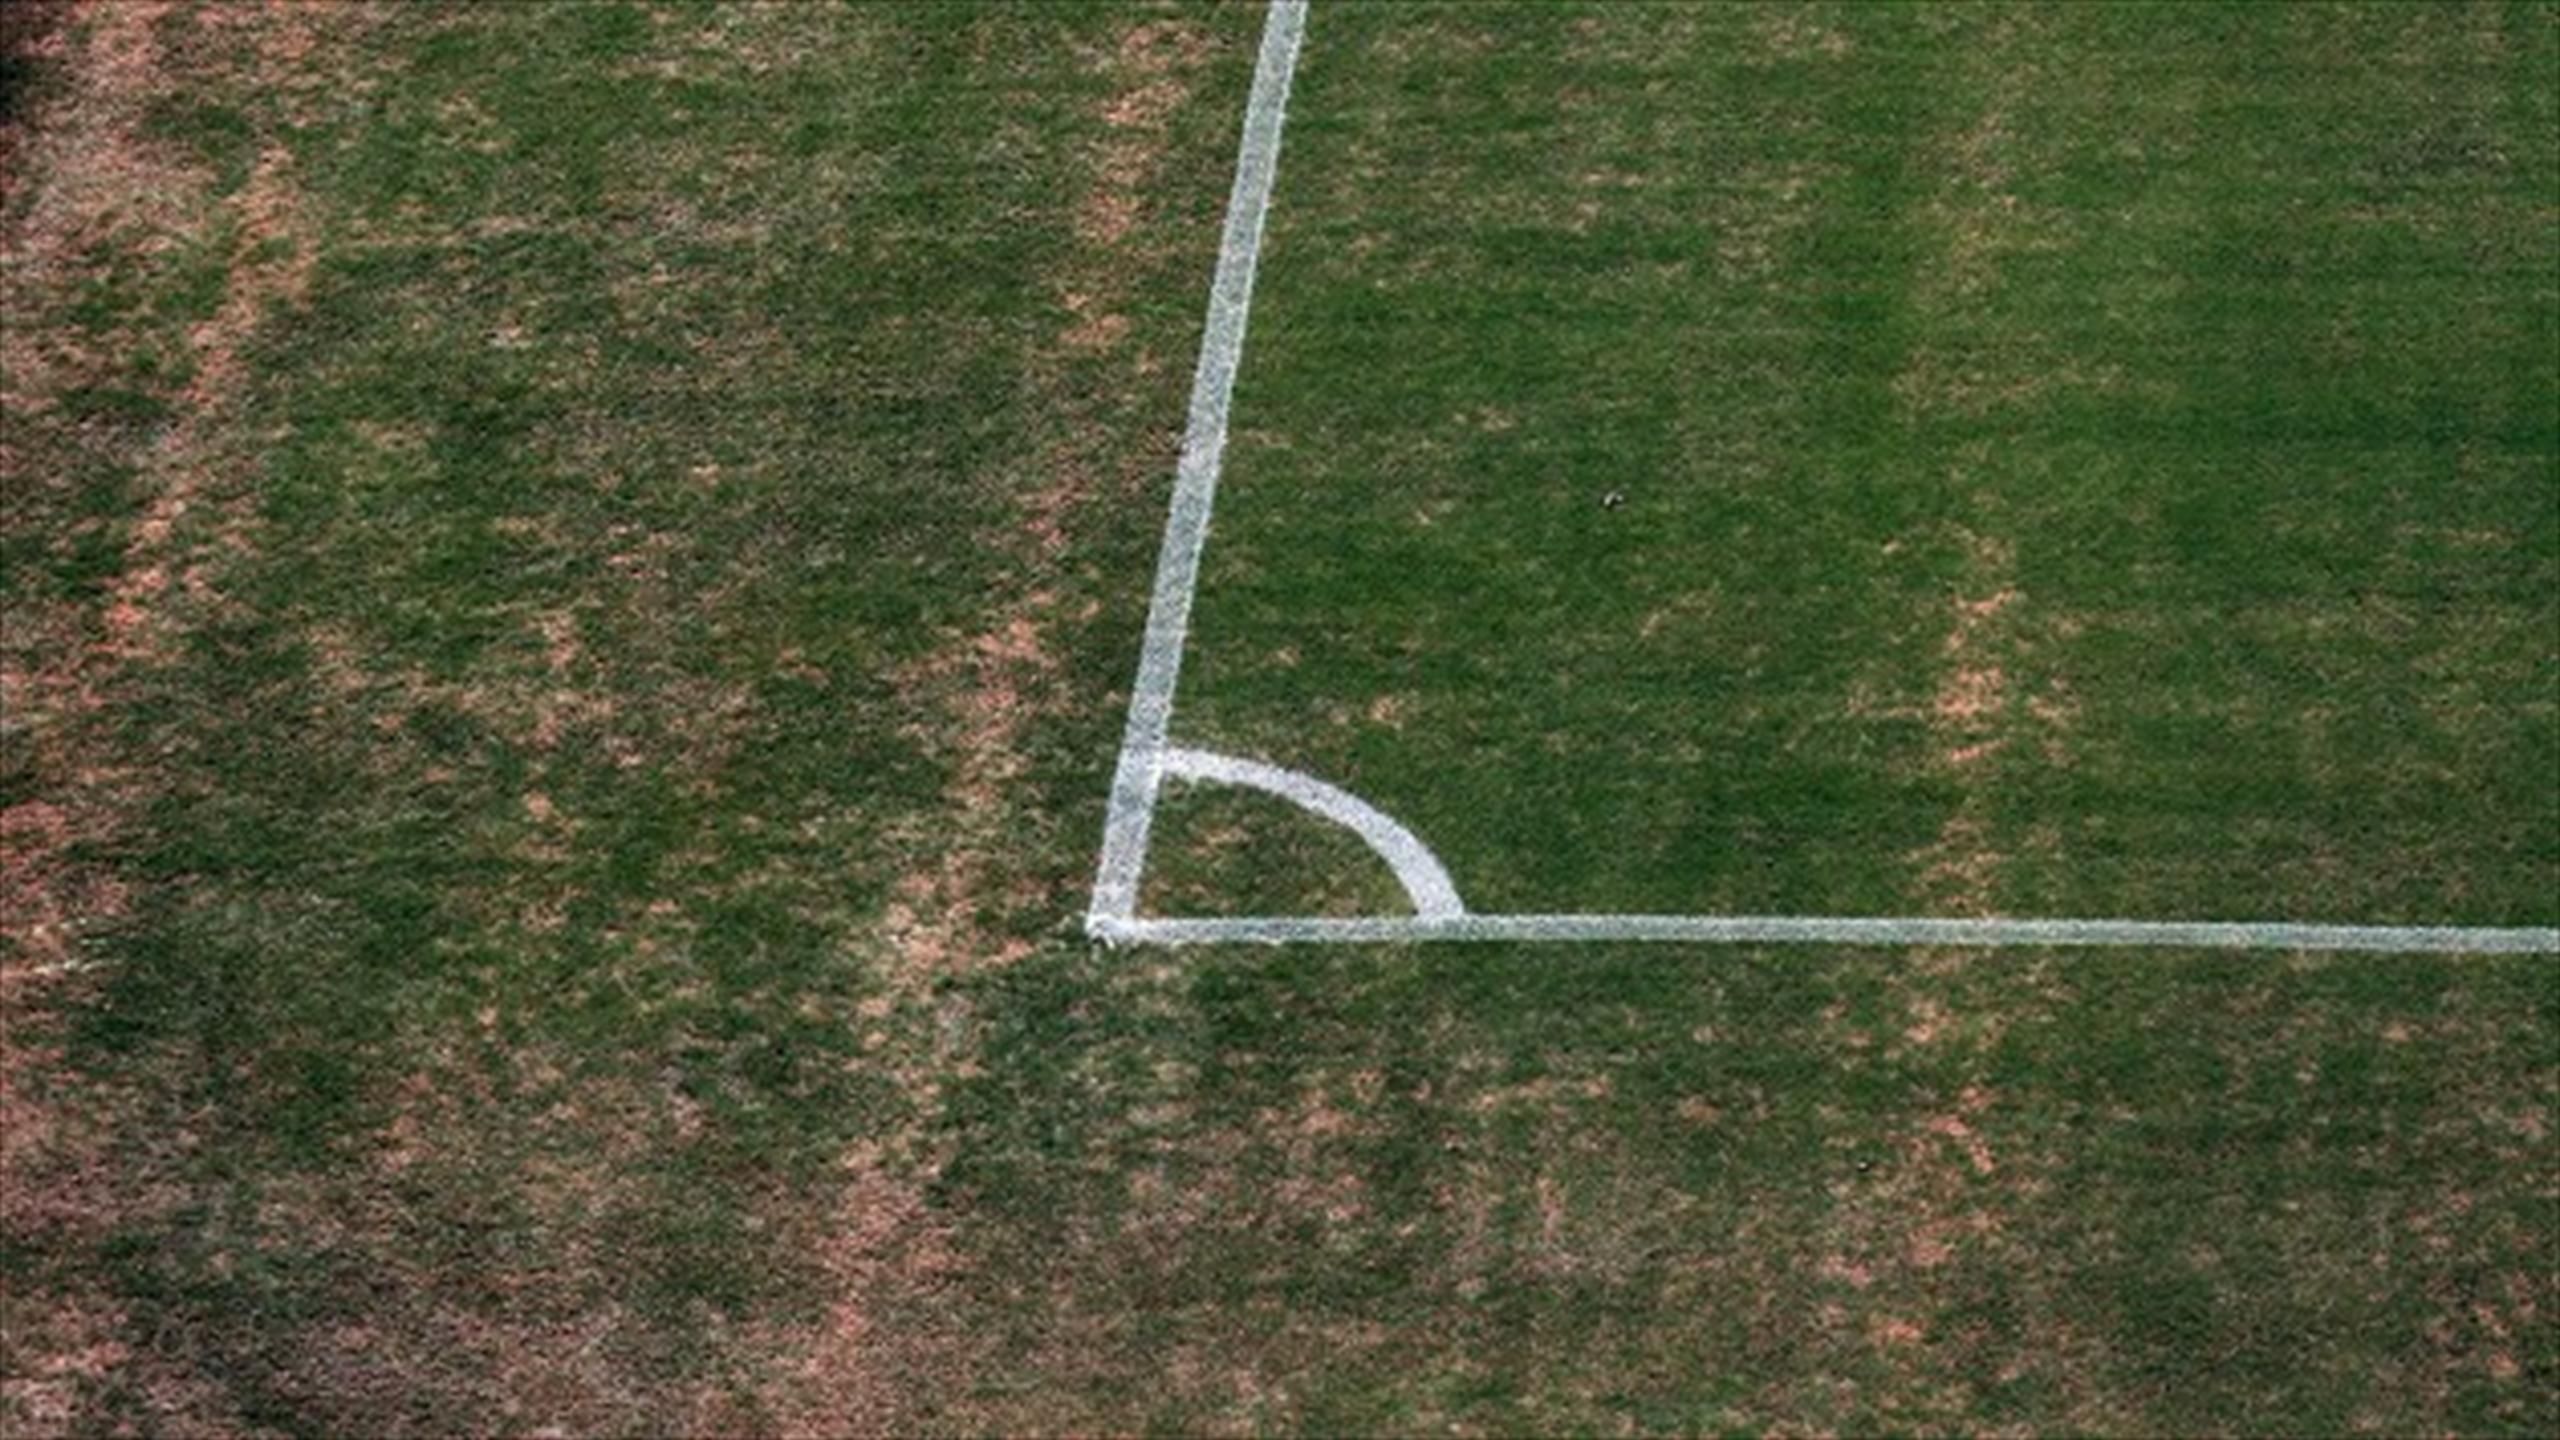 England to inspect Manaus pitch - Eurosport